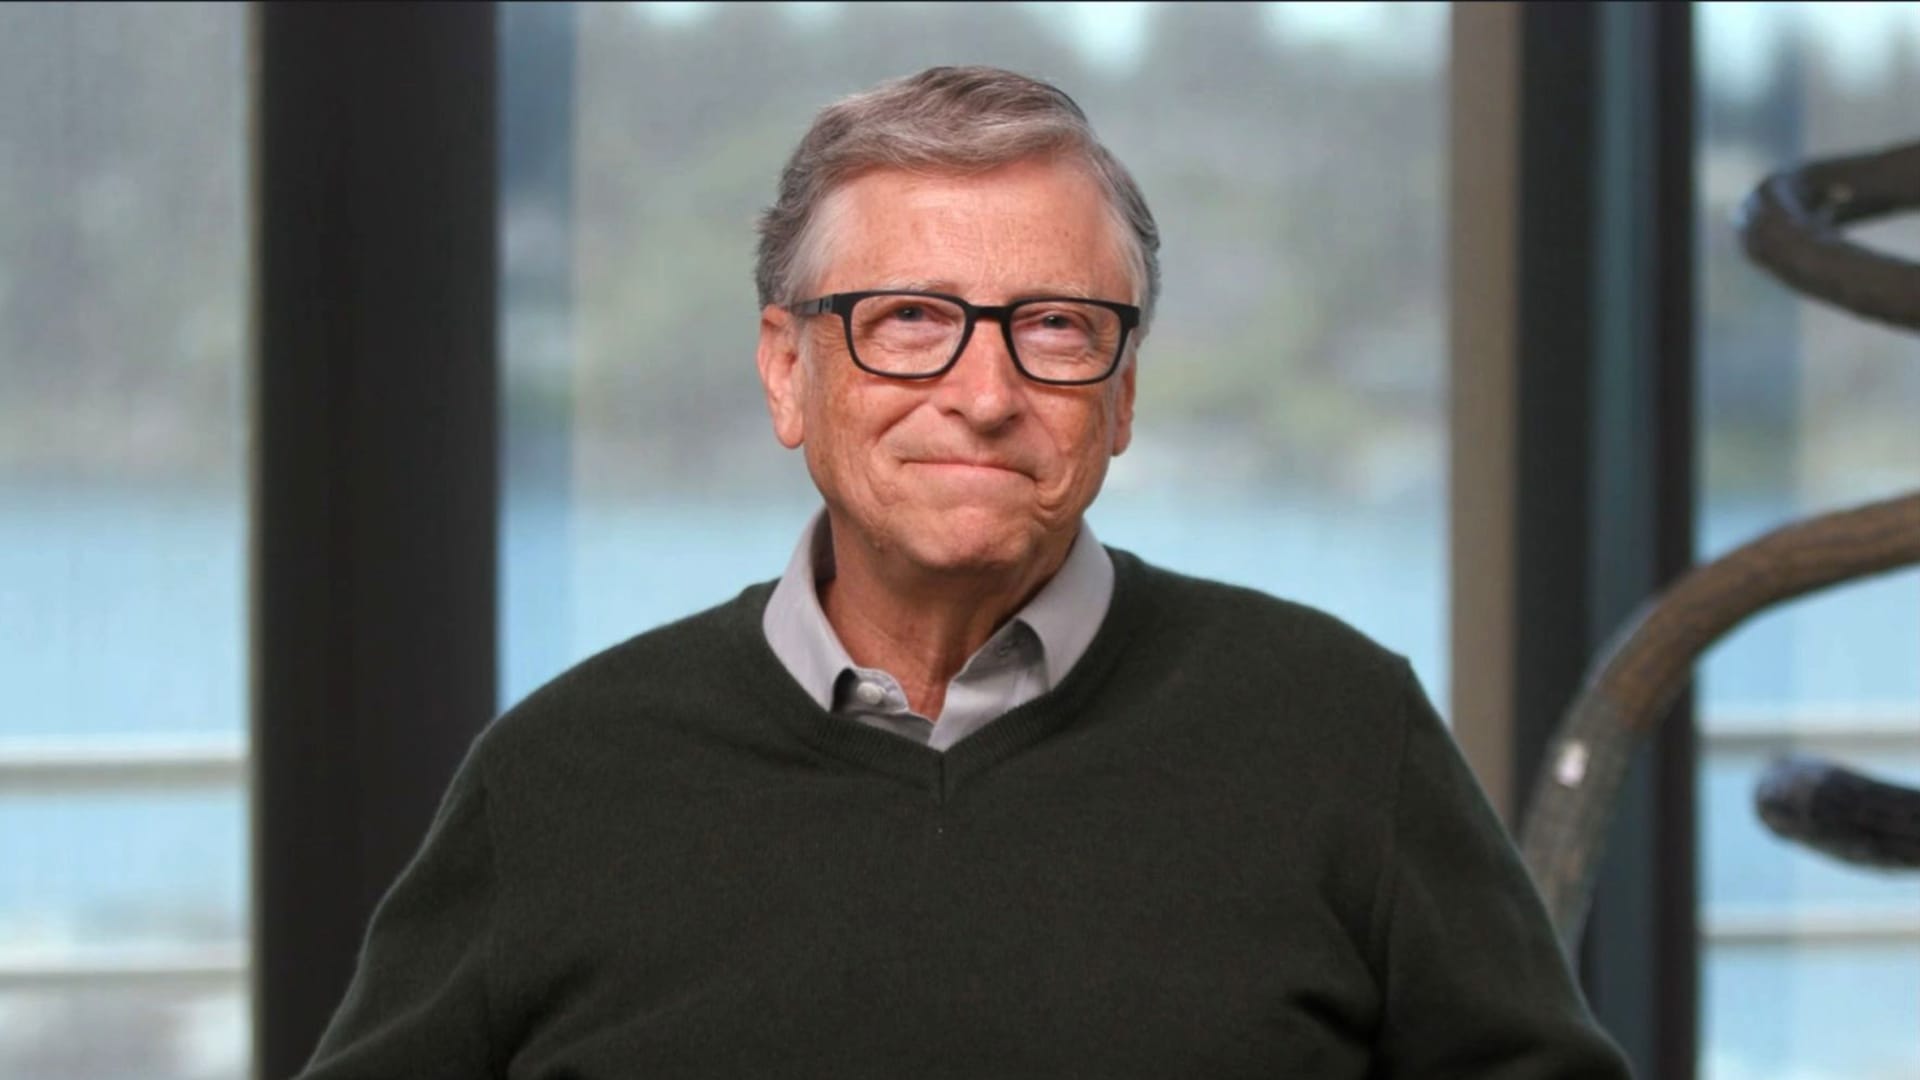 Bill Gates says social media platform Parler's content has some 'crazy stuff'